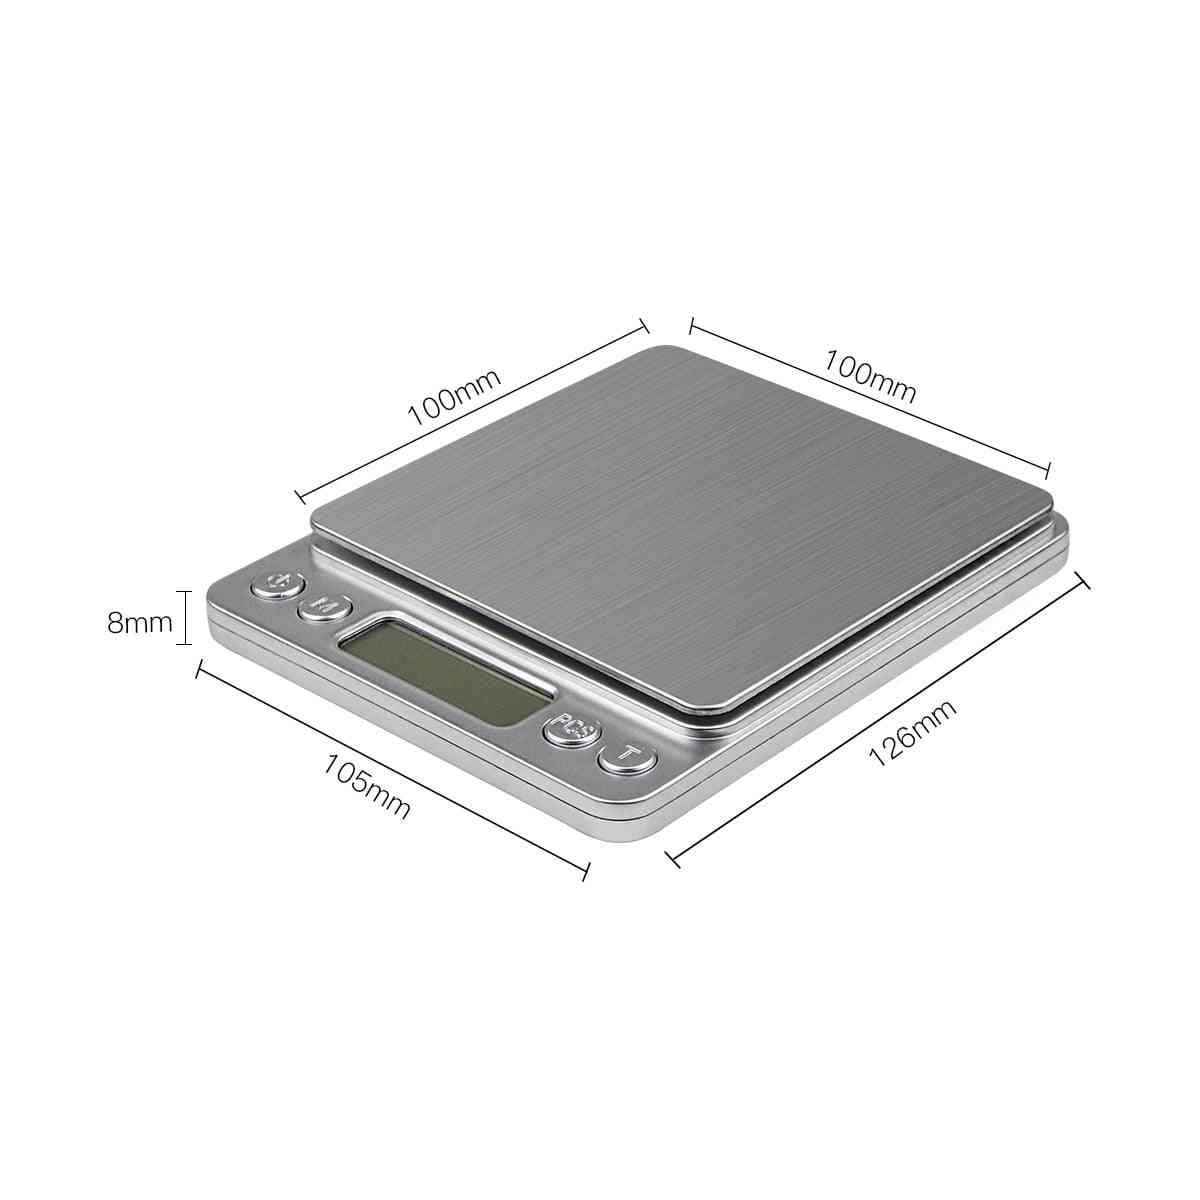 Mini Portable Digital Food Scale Measuring Tool